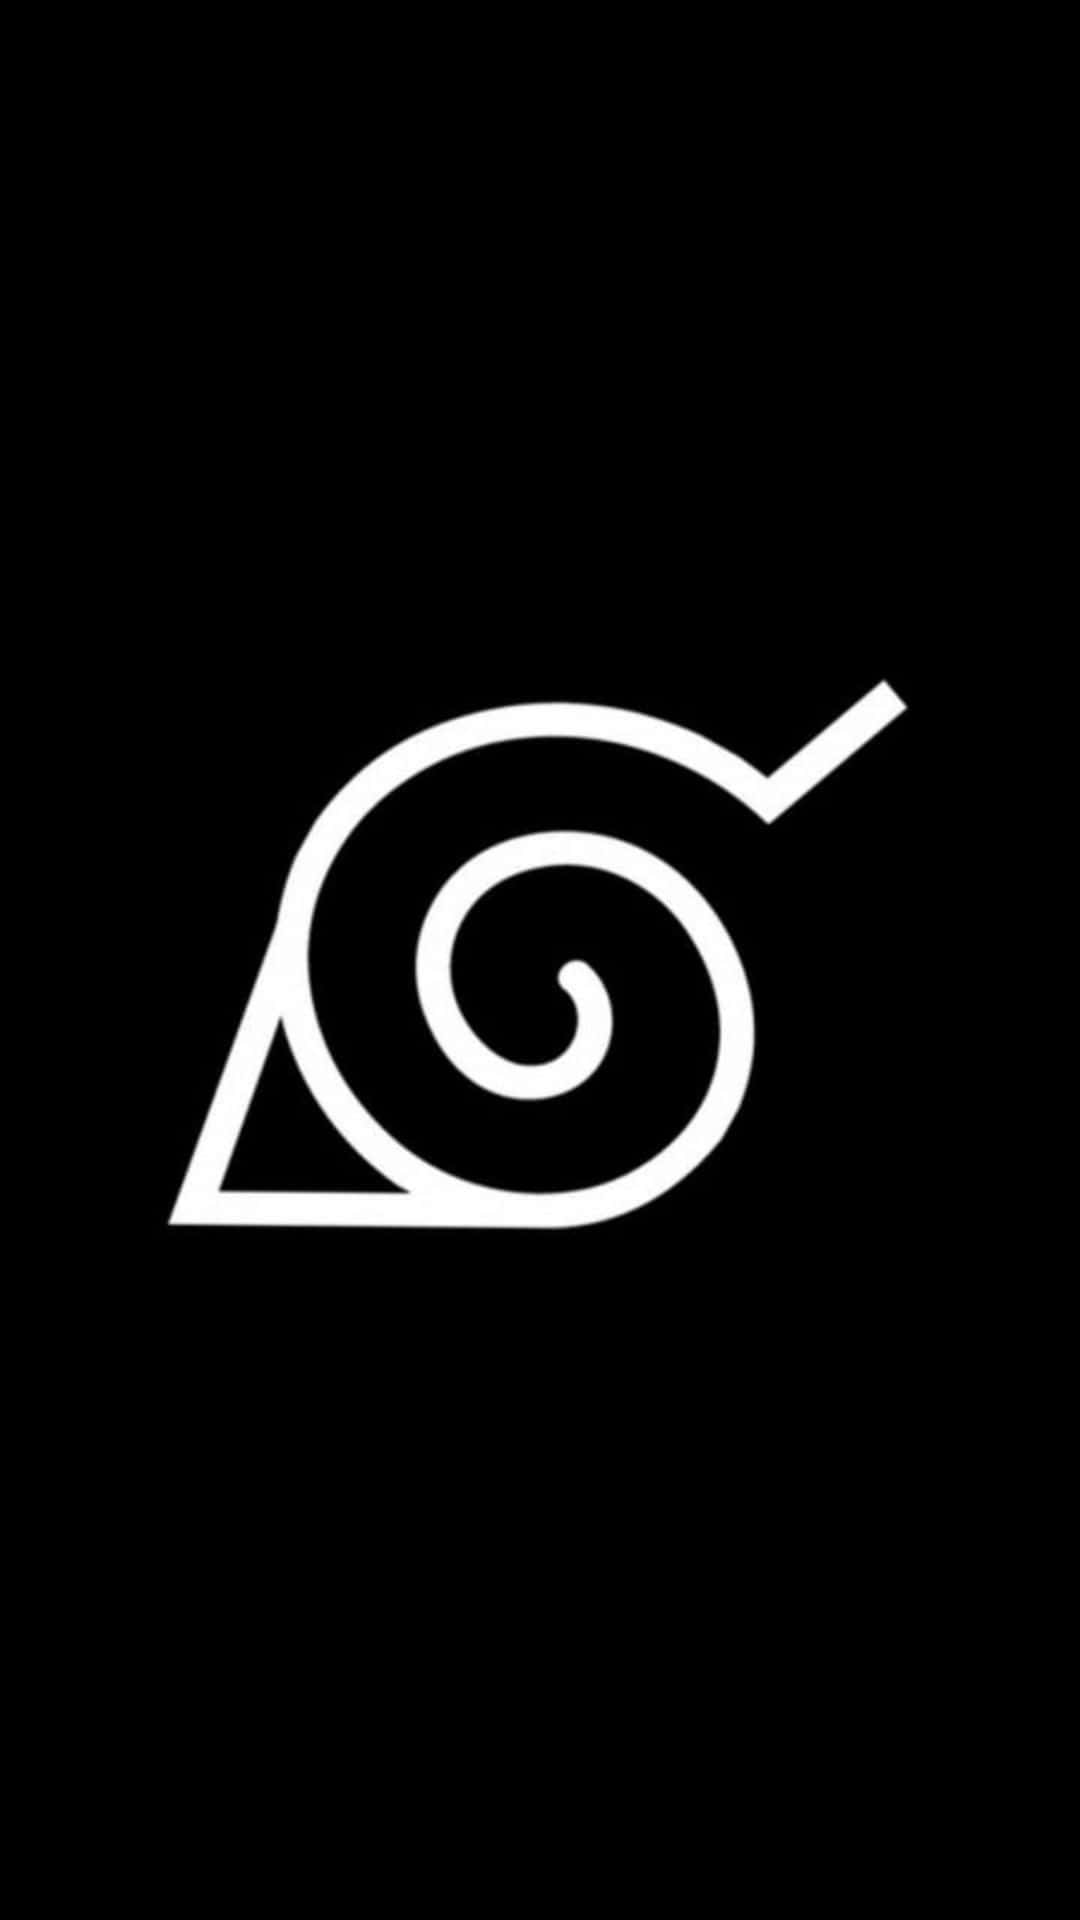 Naruto Konoha Logo Black And White Wallpaper